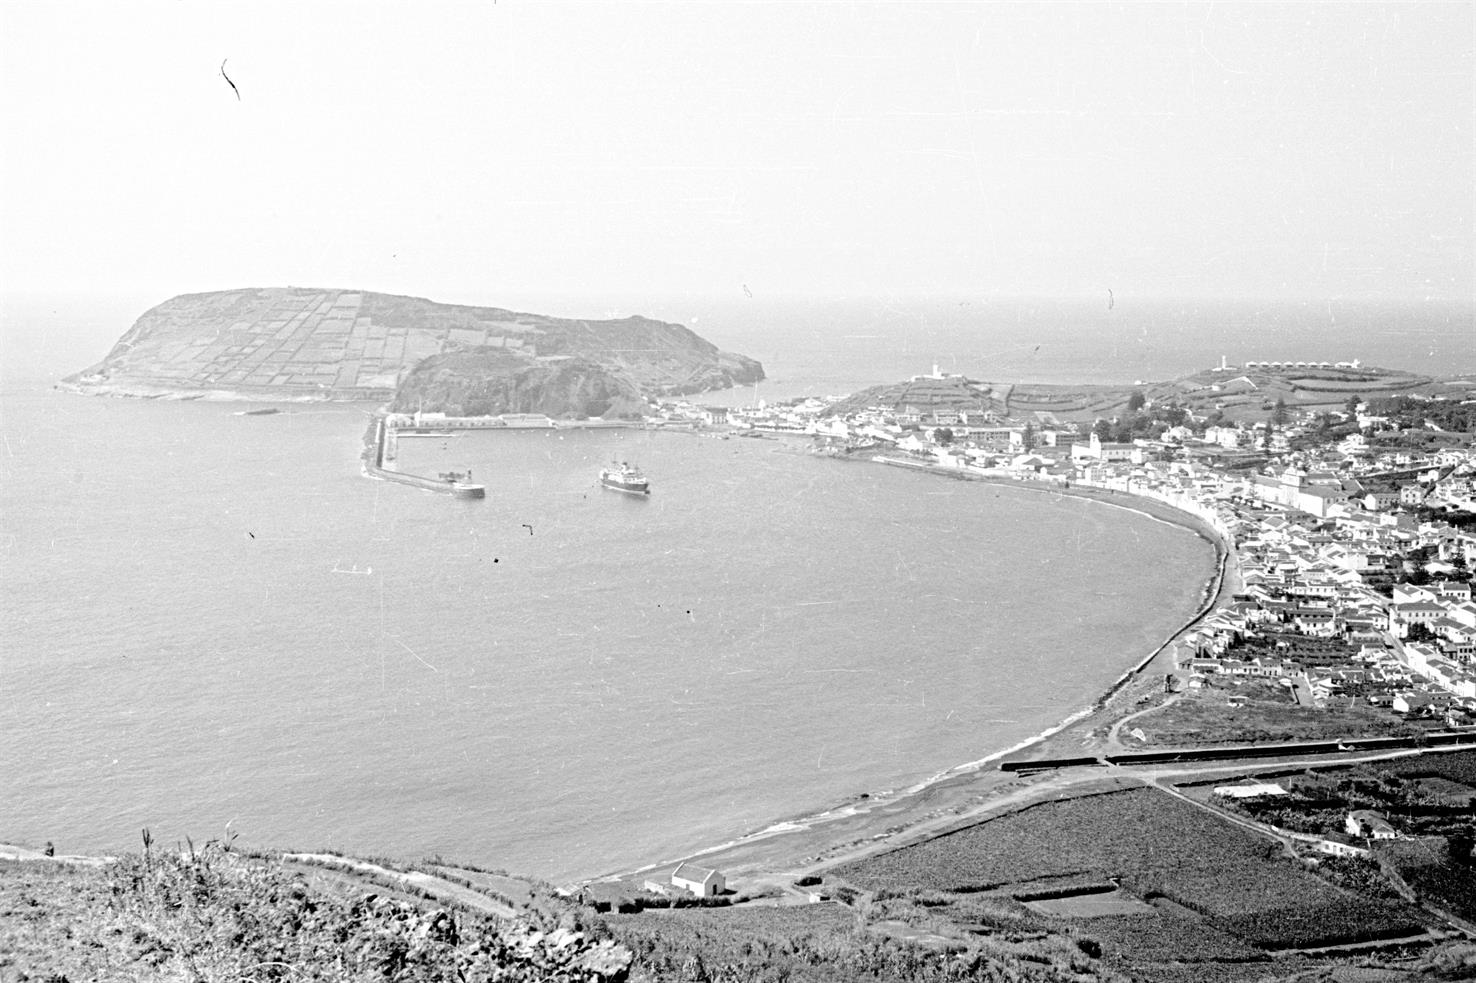 [Horta : Ilha do Faial : Açores : vista da cidade e do porto]